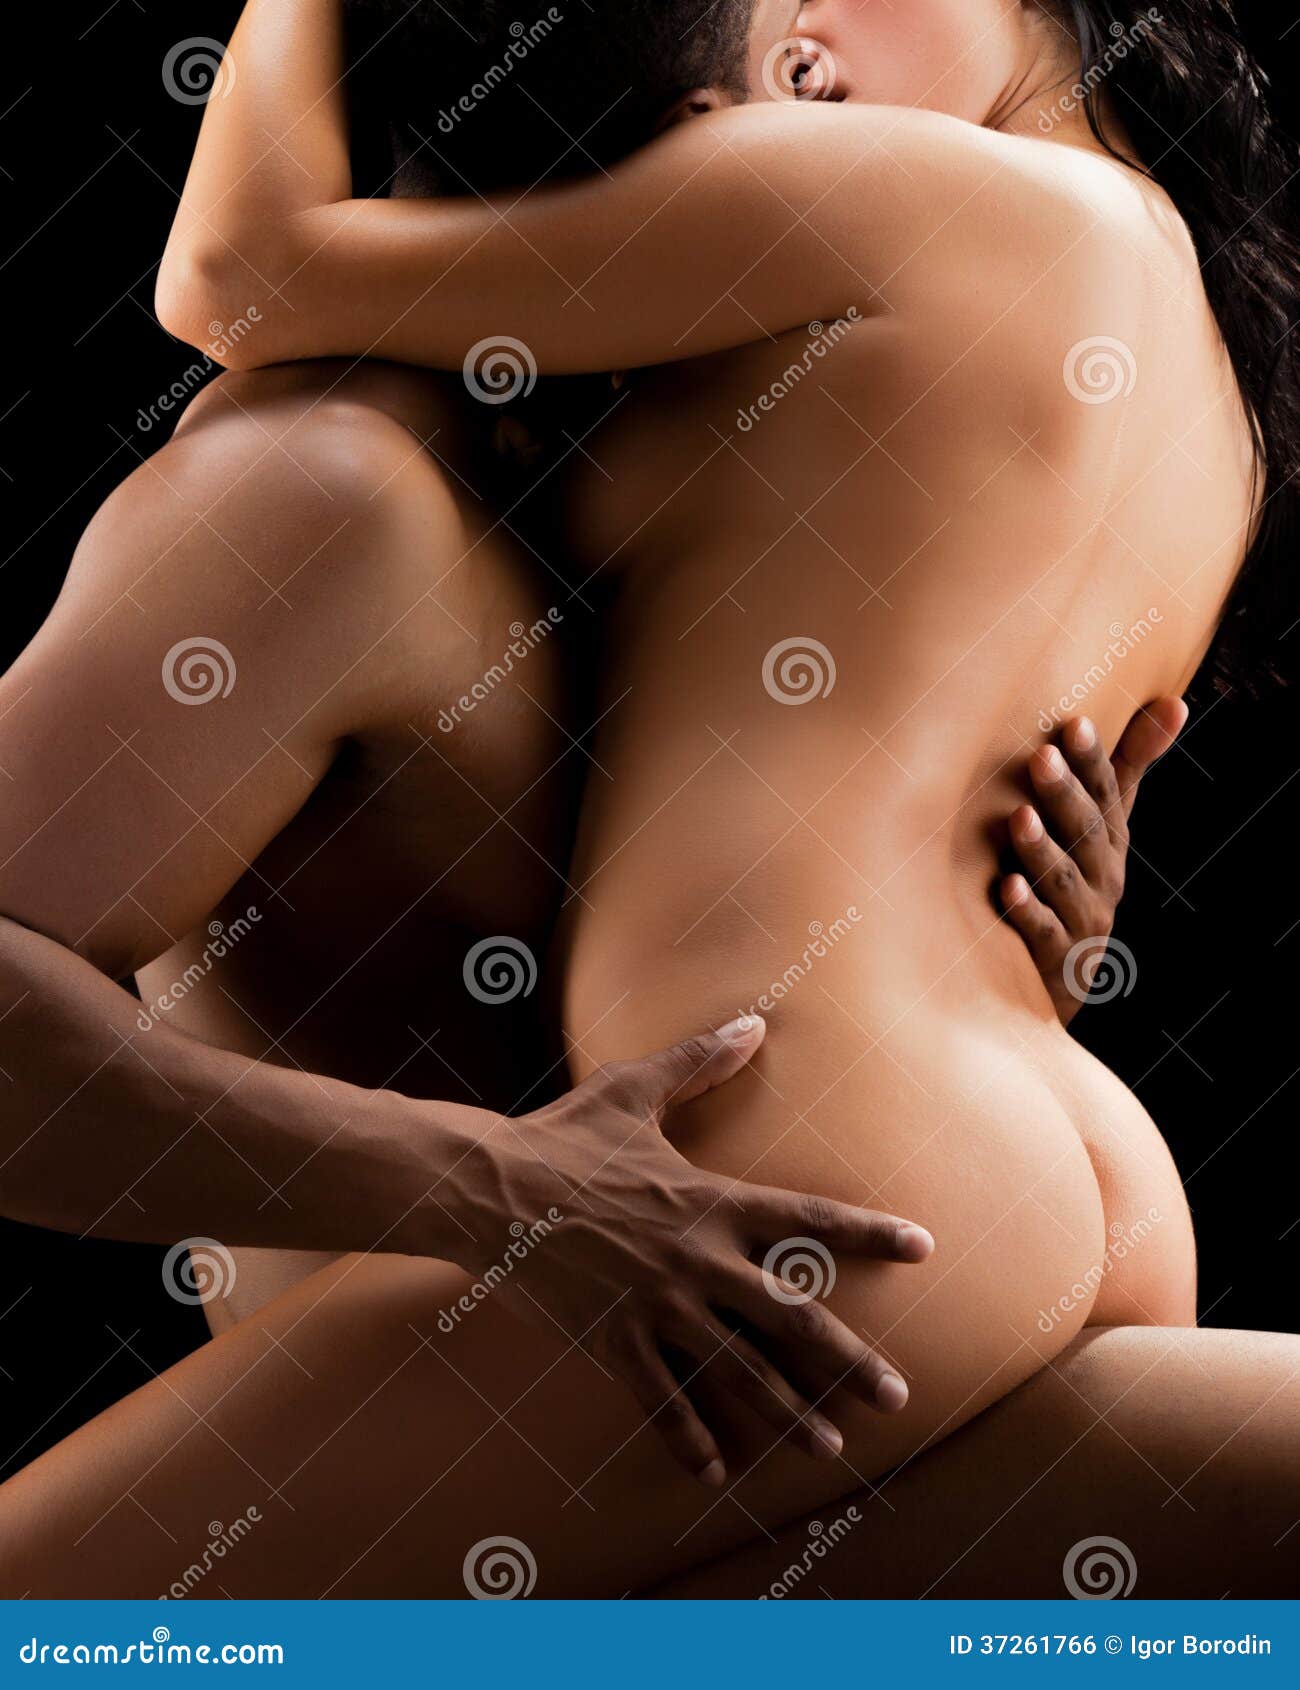 Art photo of nude couple stock photo. Image of adult - 37261766